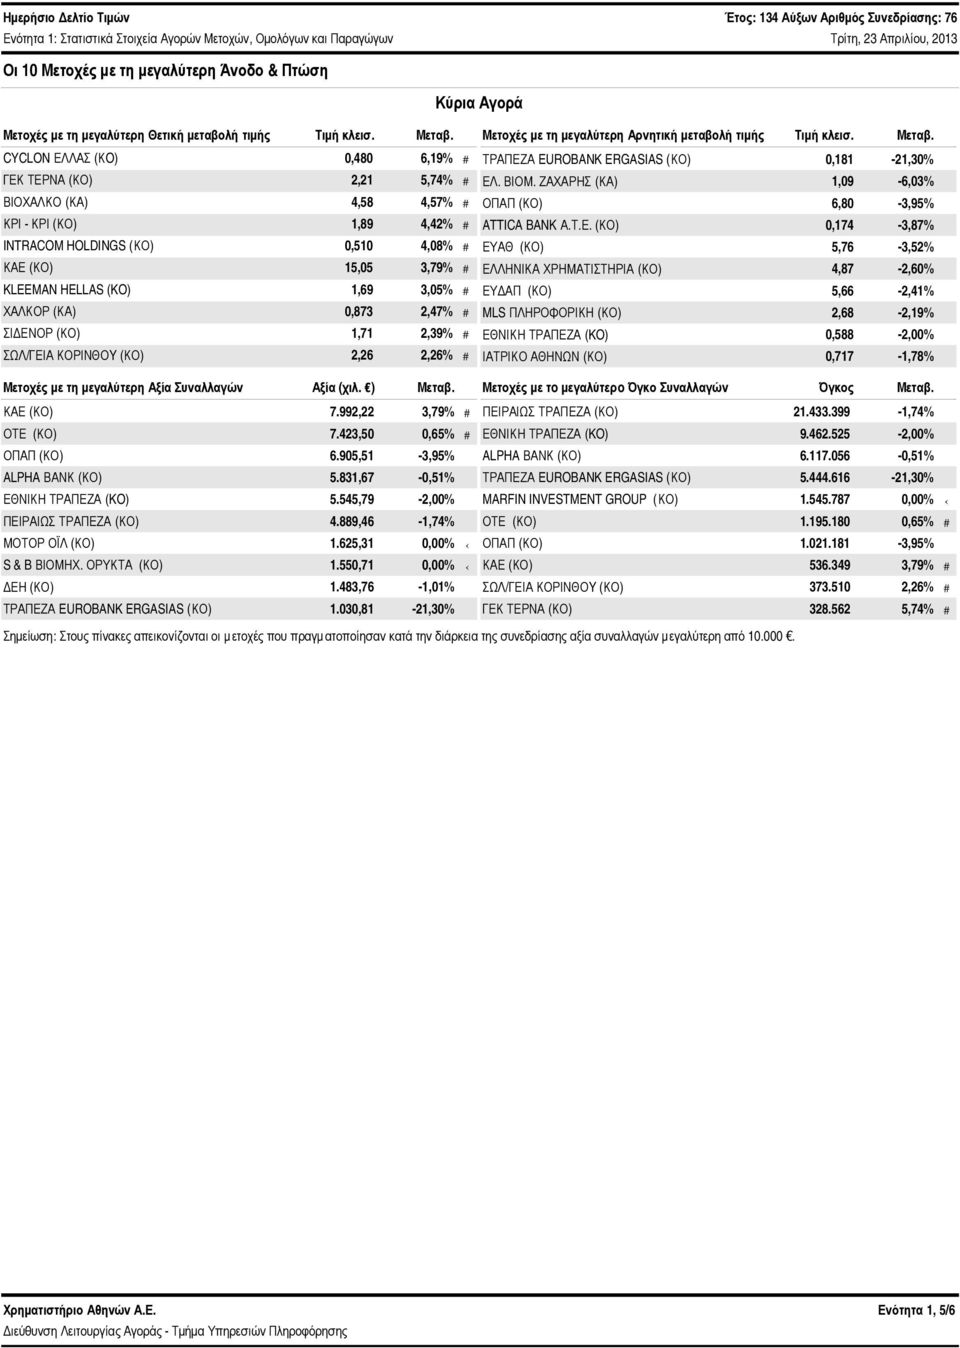 CYCLON ΕΛΛΑΣ (ΚO),48 6,19% # ΓΕΚ ΤΕΡΝΑ (ΚΟ) 2,21 5,74% # ΒΙΟΧΑΛΚΟ (ΚΑ) 4,58 4,57% # ΚΡΙ - ΚΡΙ (ΚΟ) 1,89 4,42% # INTRACOM HOLDINGS (ΚΟ),51 4,8% # ΚΑΕ (ΚΟ) 15,5 3,79% # KLEEMAN HELLAS (KO) 1,69 3,5% #